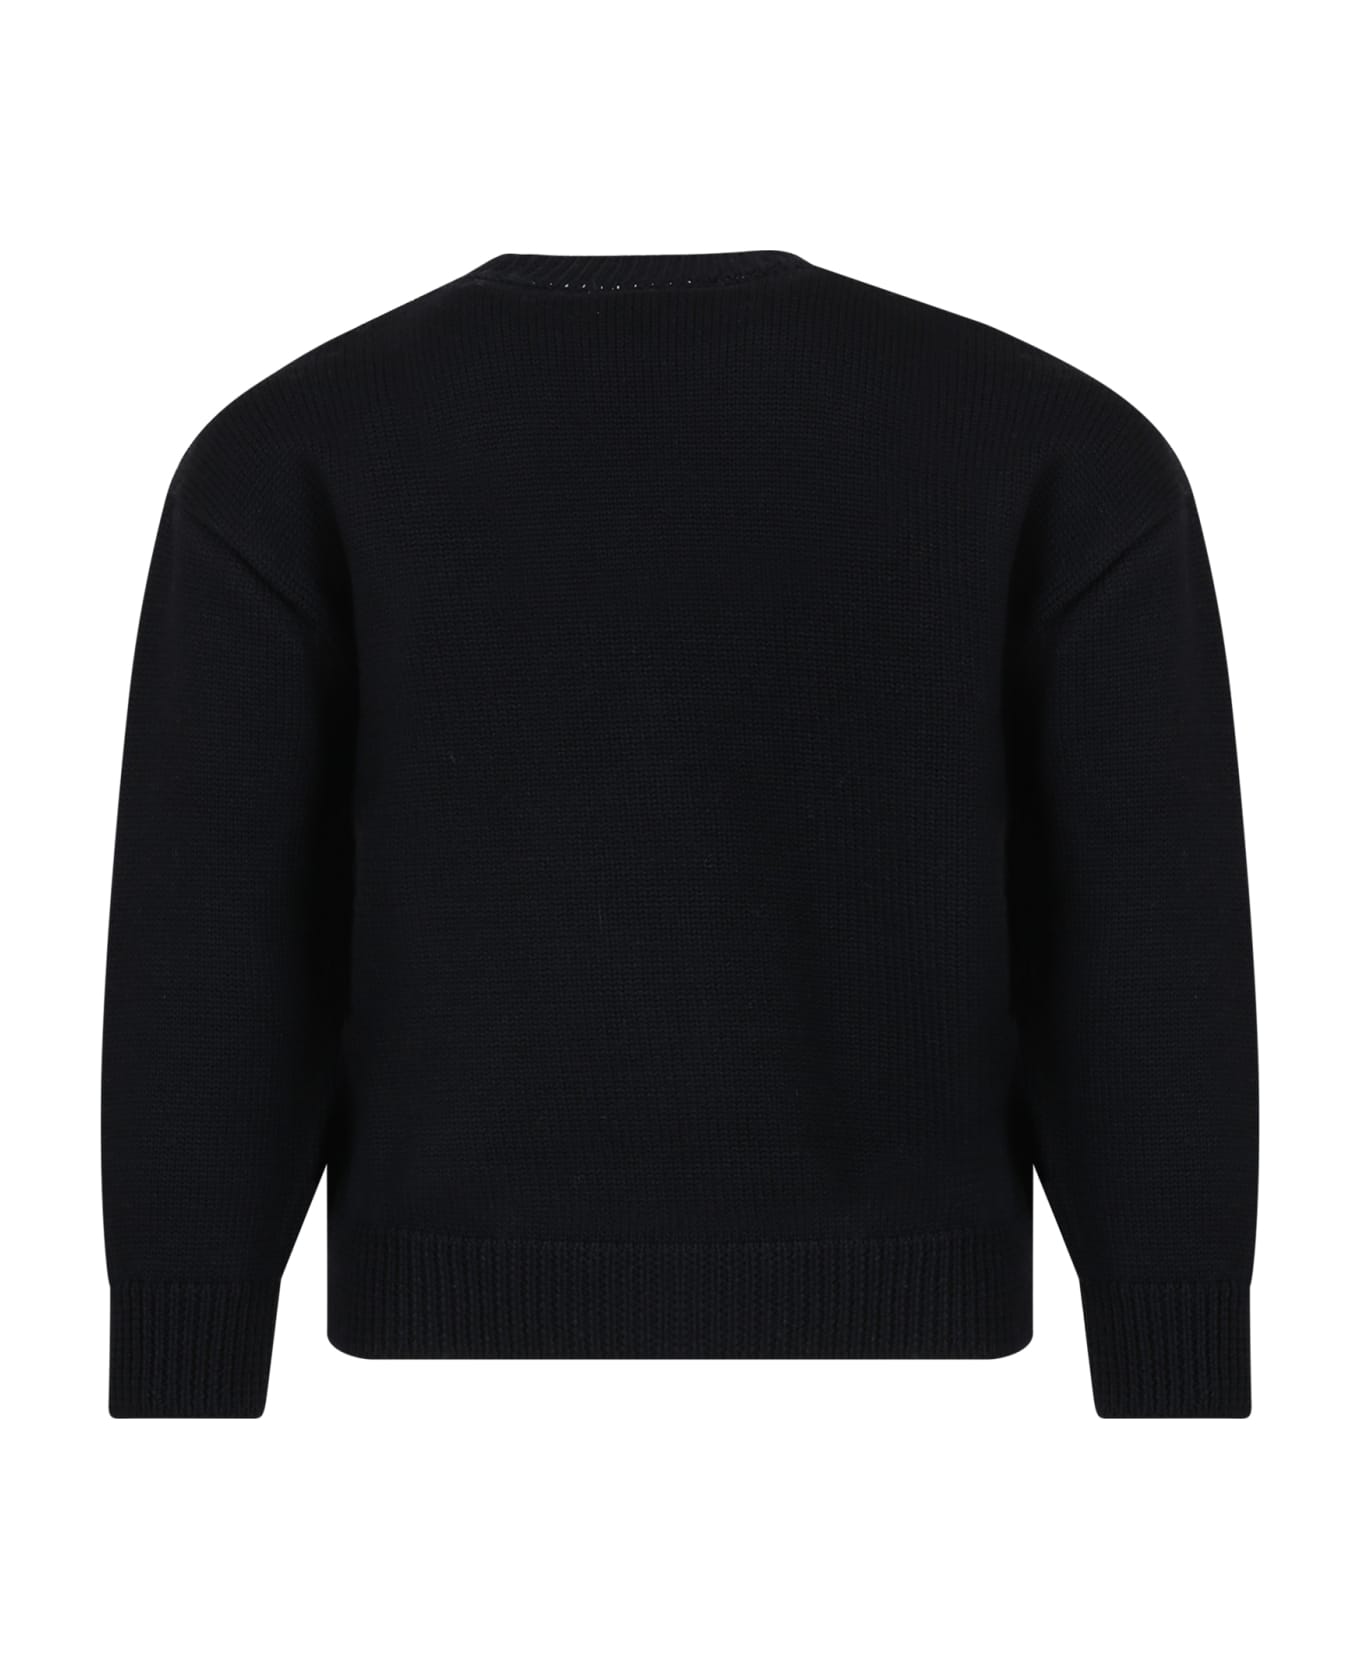 Fendi Black Sweater With Logo For Kids - Black